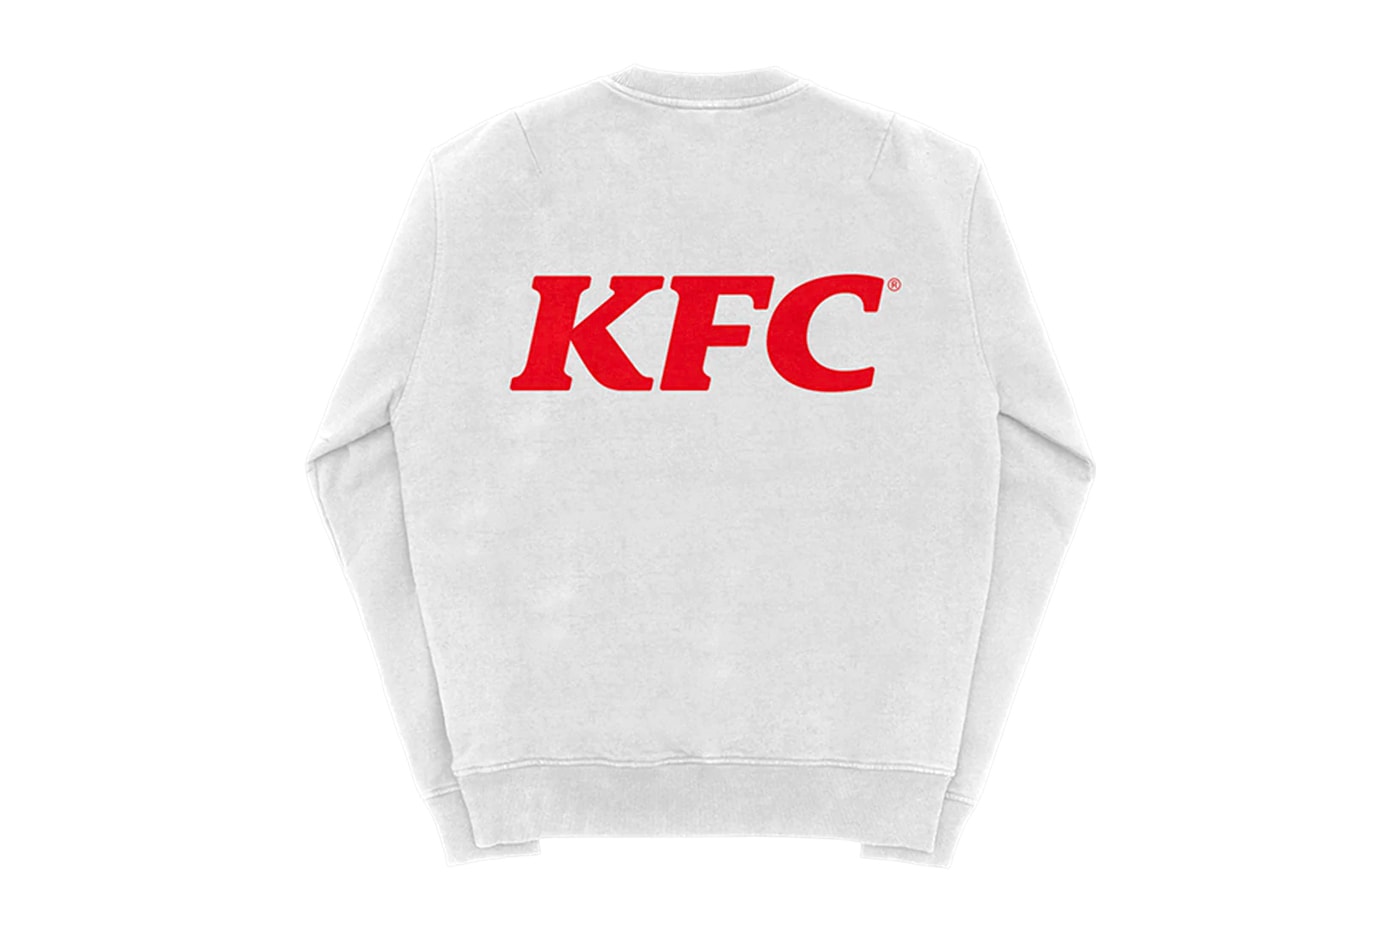 KFC Jack Harlow Meal Merch Release Info Buy Price 